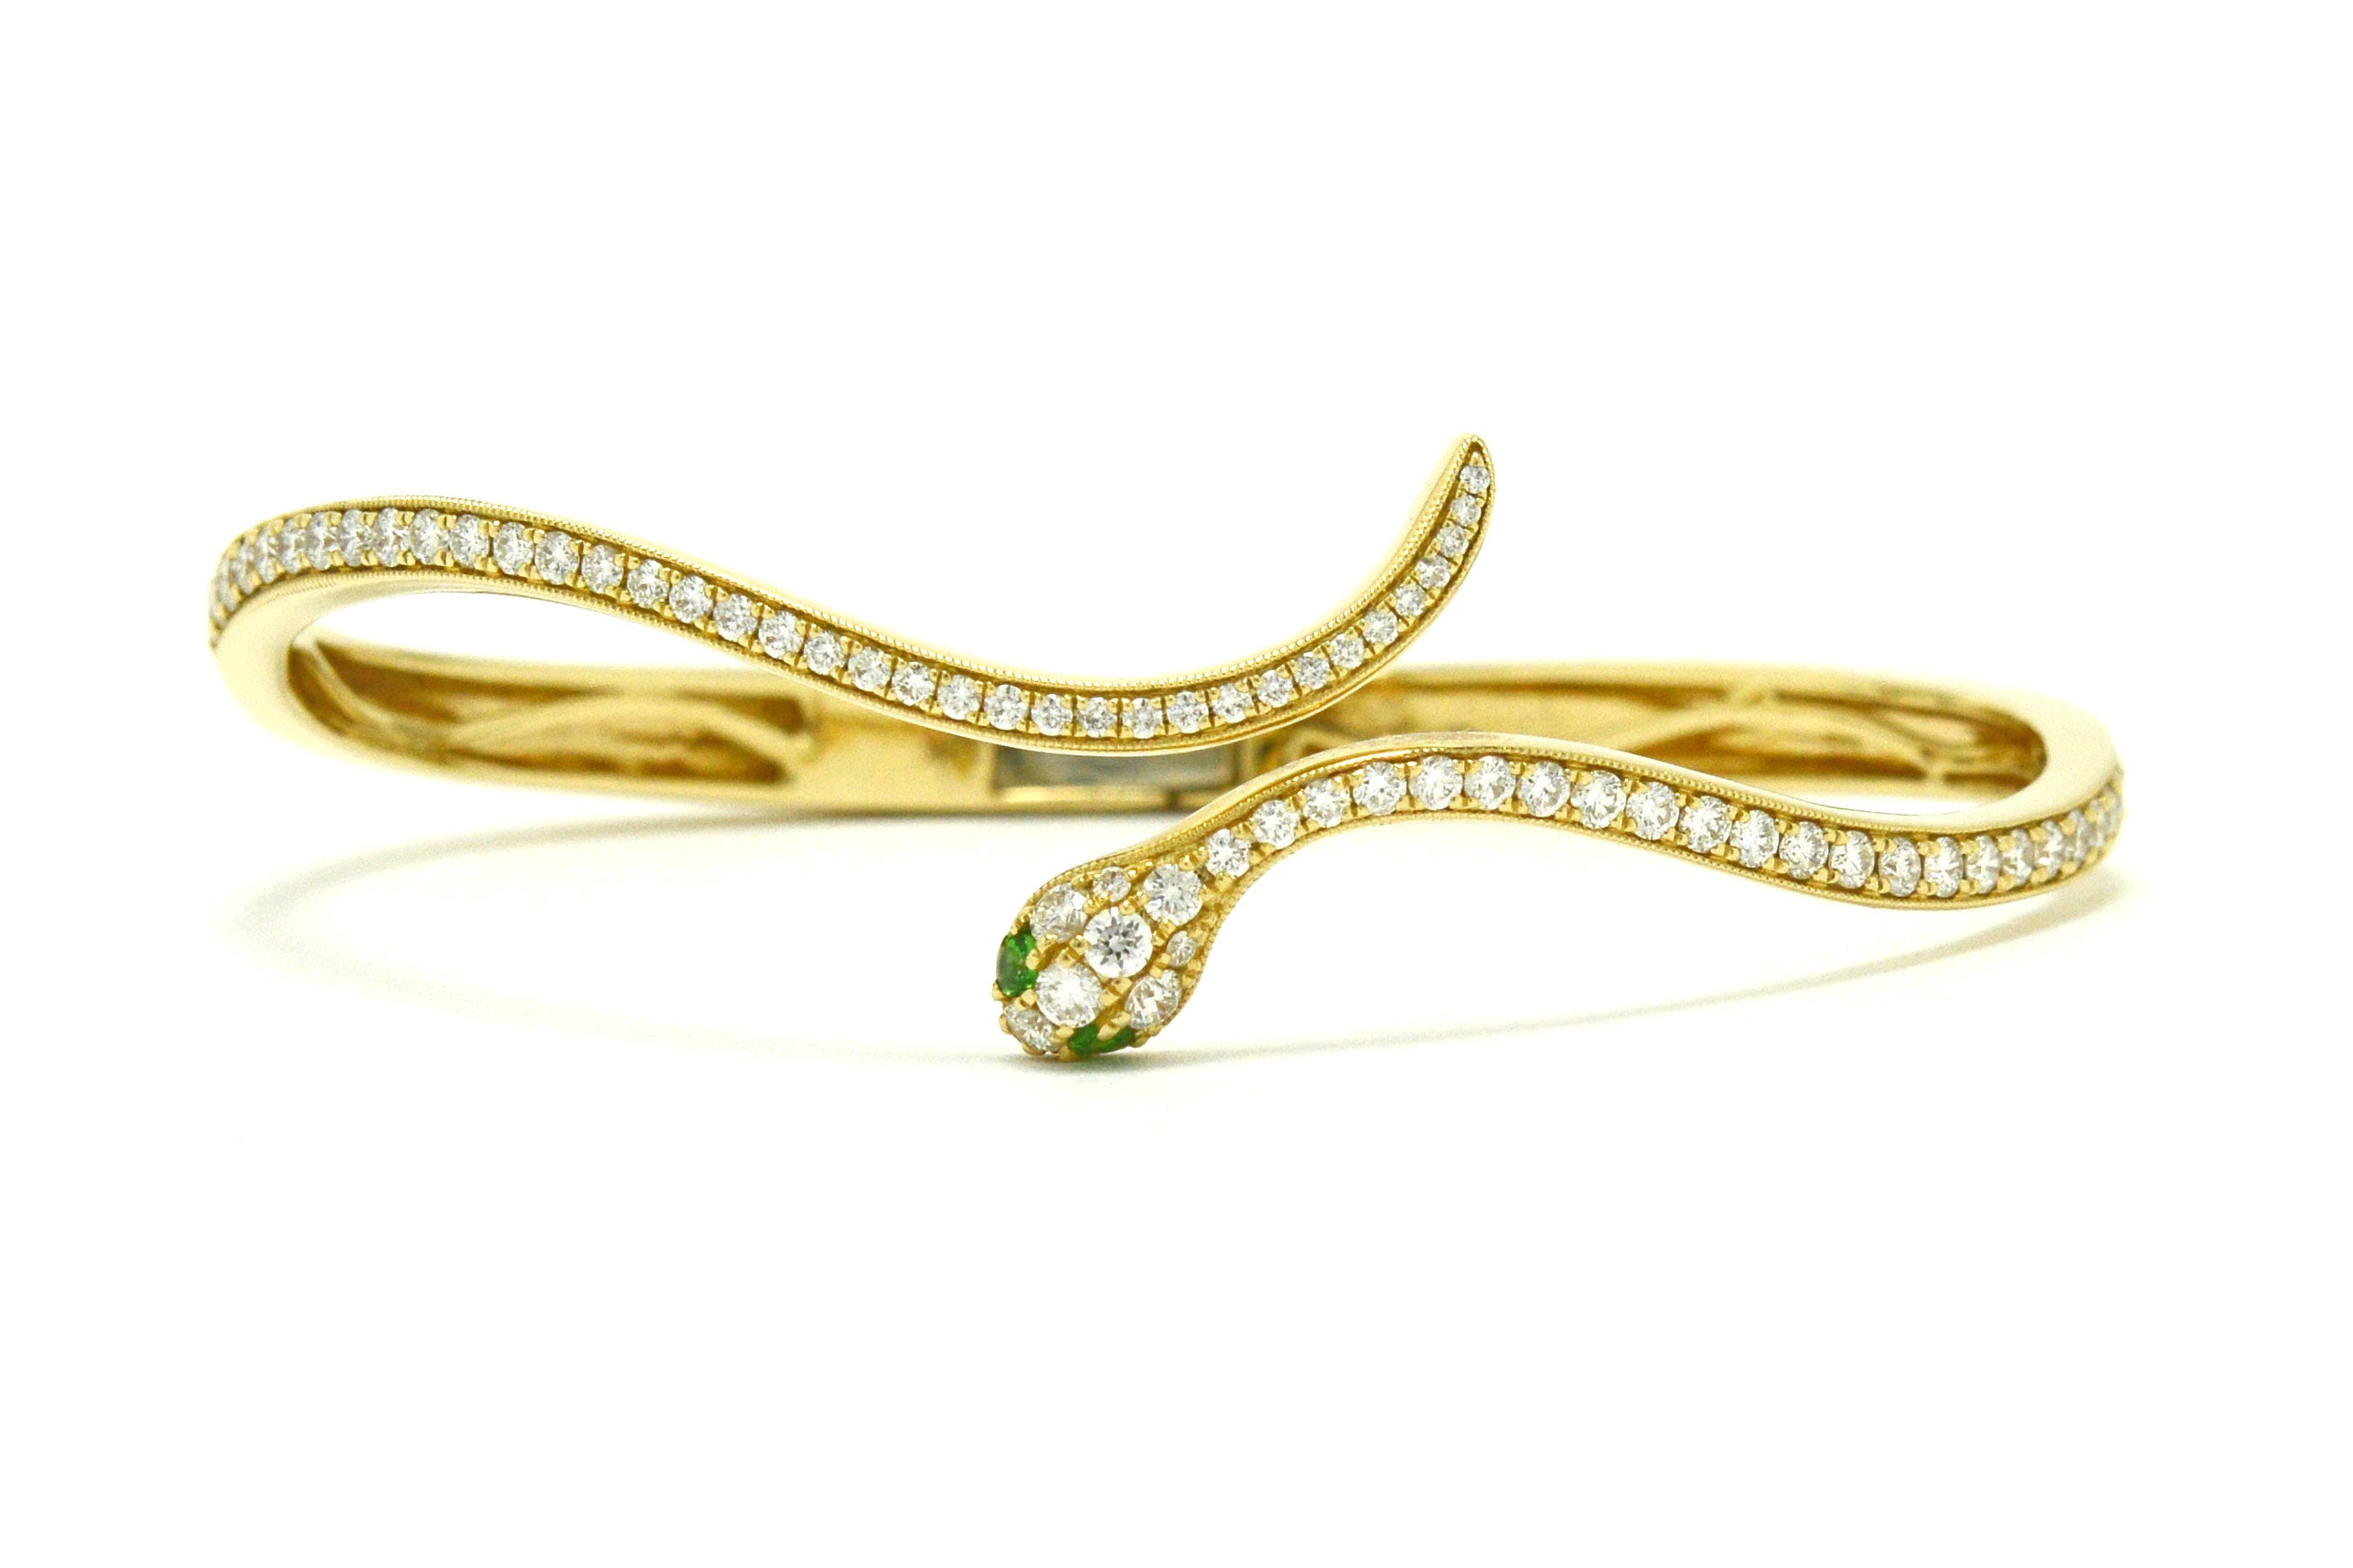 A newly made 14k Egyptian revival snake bangle bracelet with diamonds.